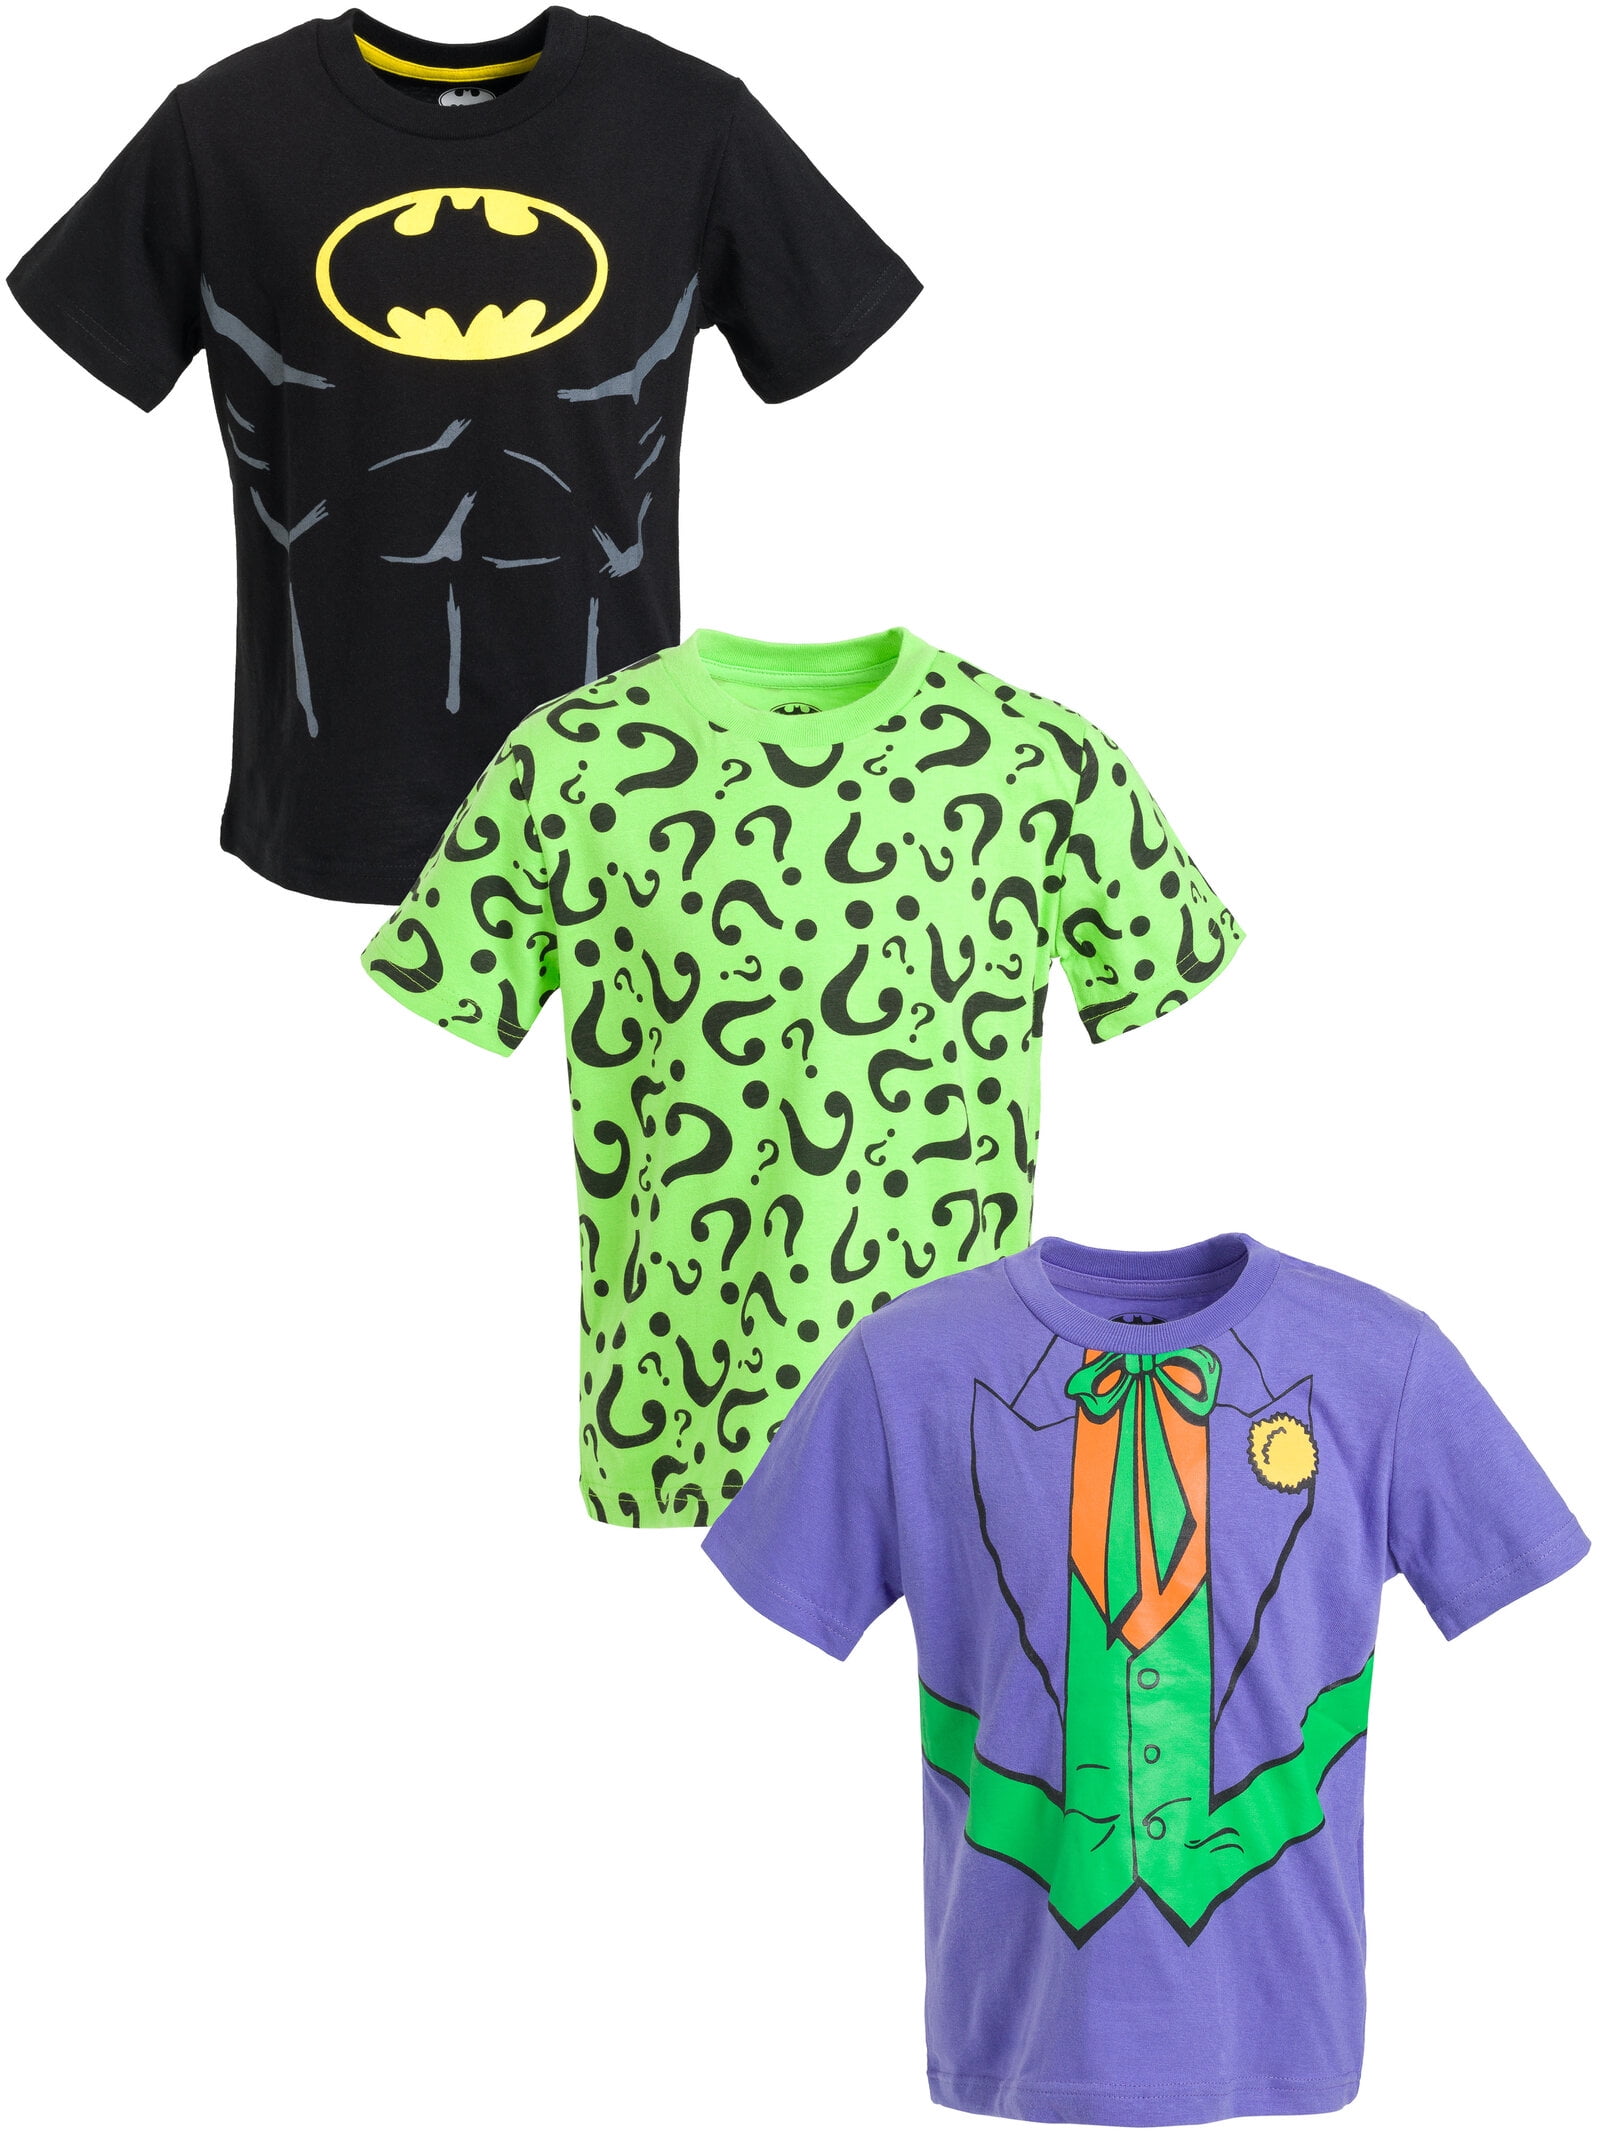 Batman Riddler Uniform (Front/Back PRINT)-S/S Youth T-Shirt